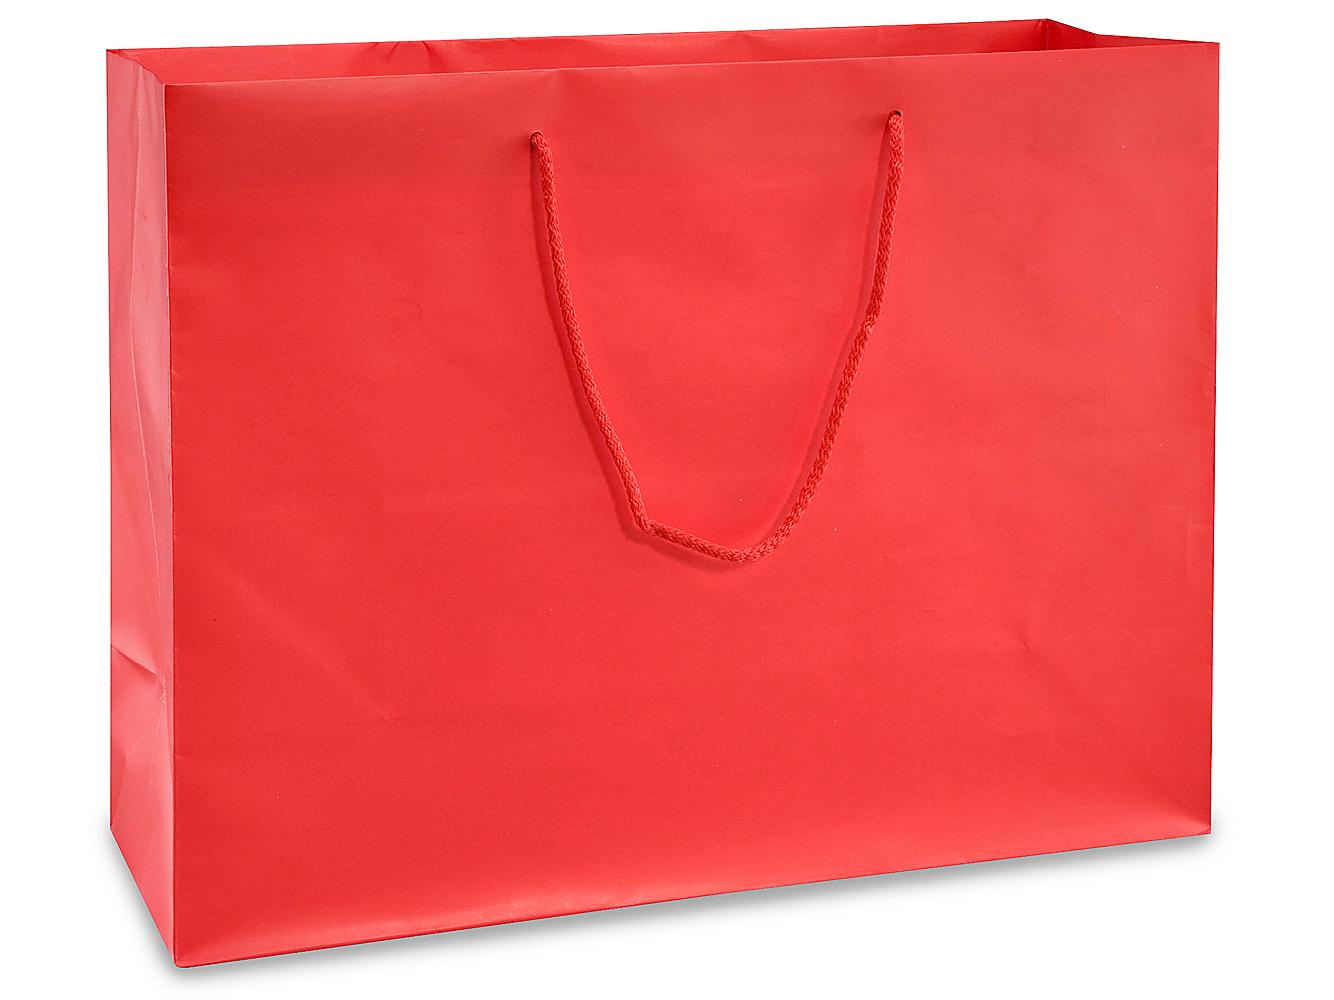 Matte Laminate Shopping Bags - 16 x 6 x 12